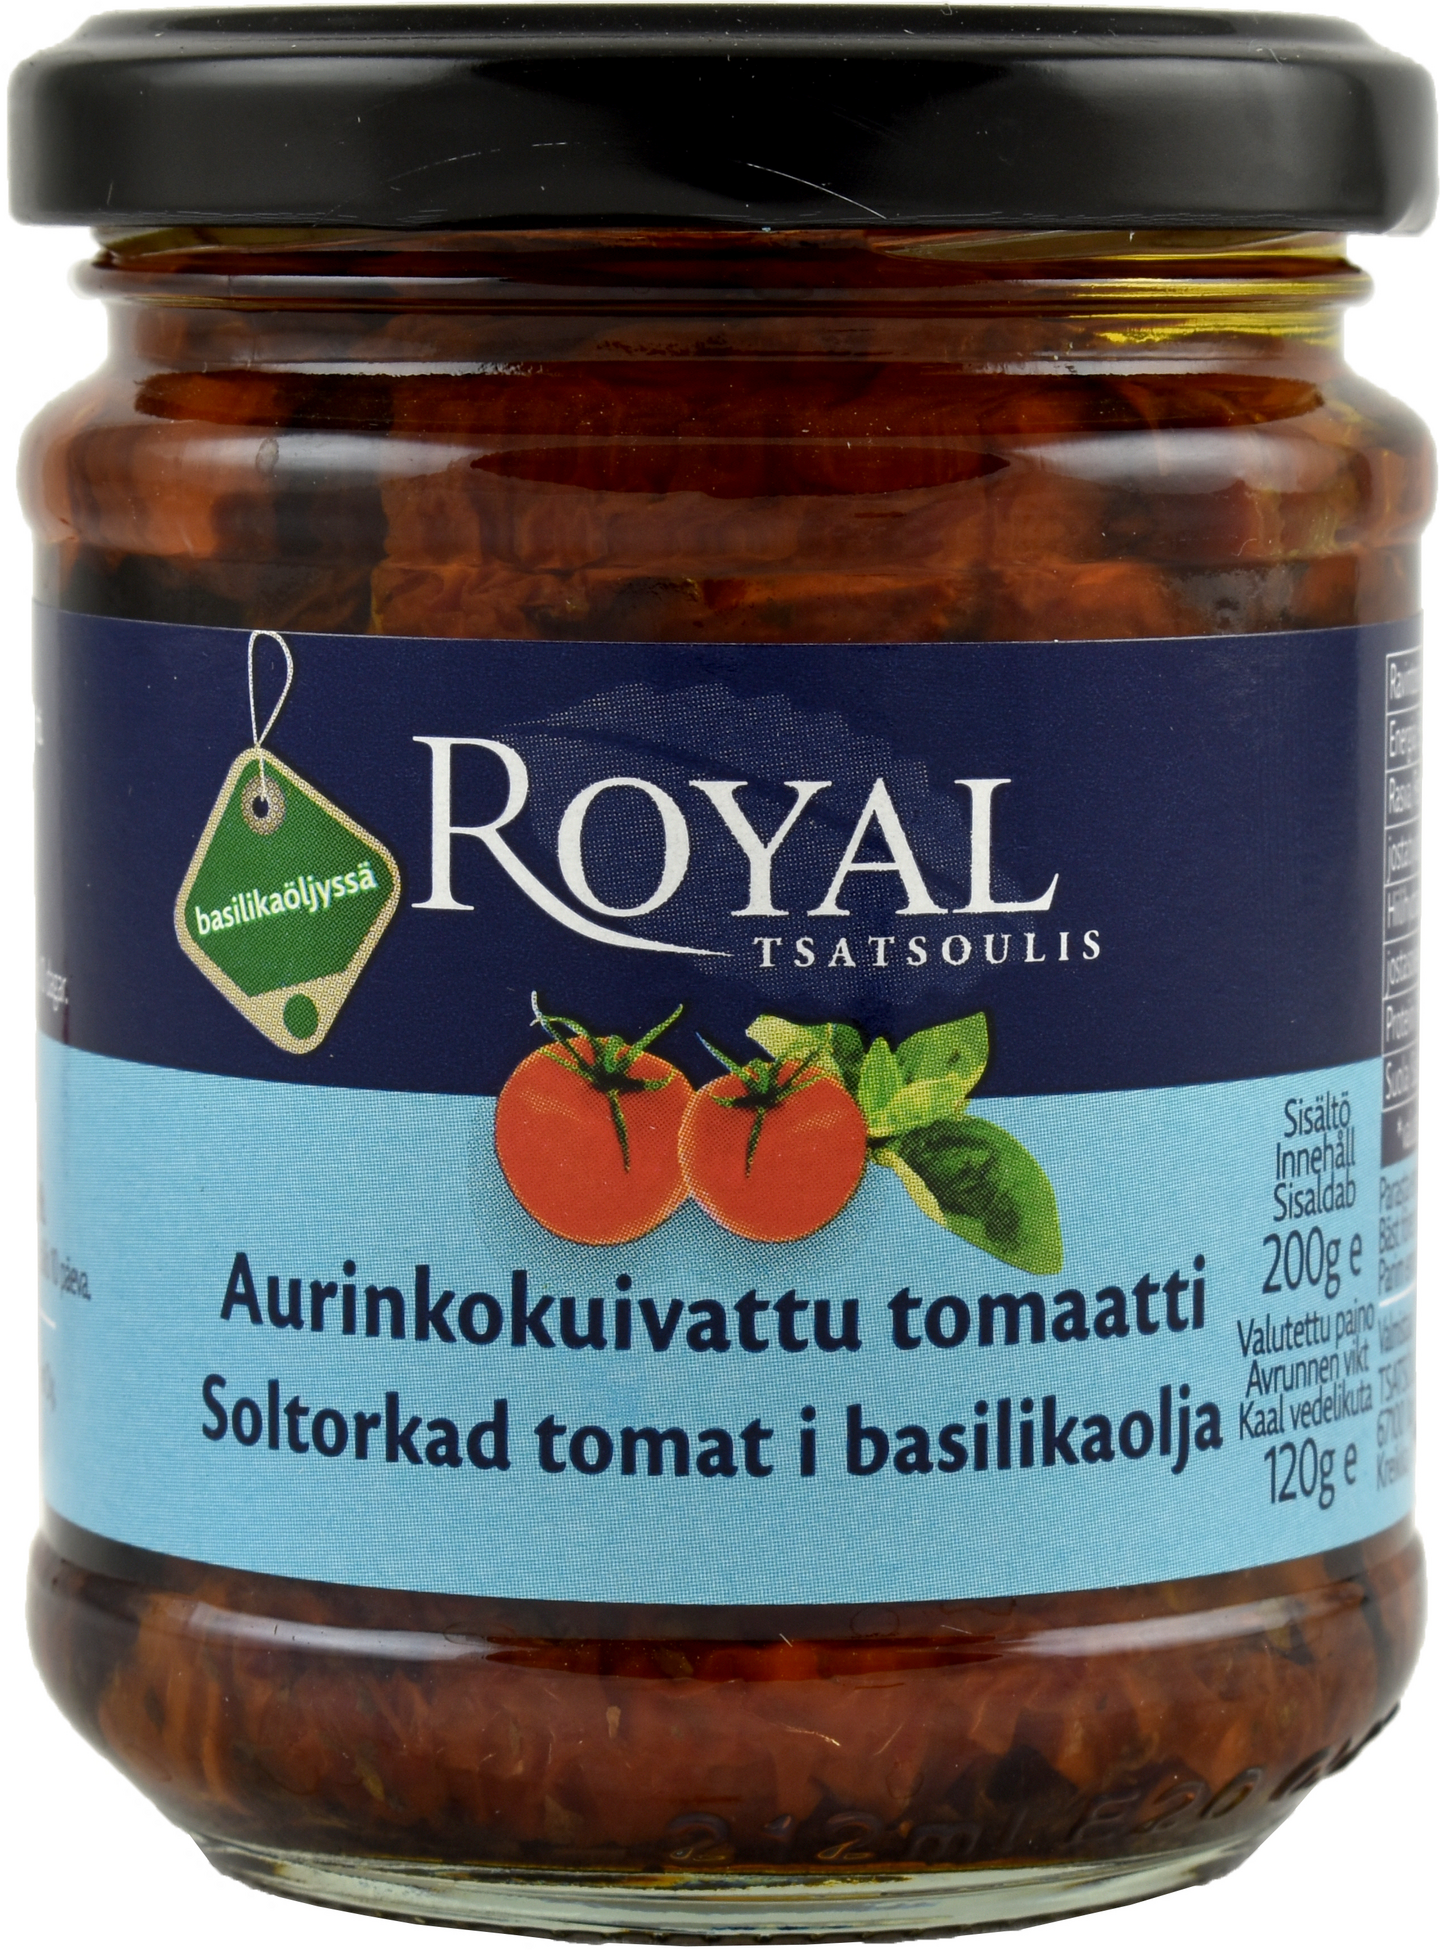 Royal aurinkokuivattu tomaatti basilikaöljyssä 200/120 g